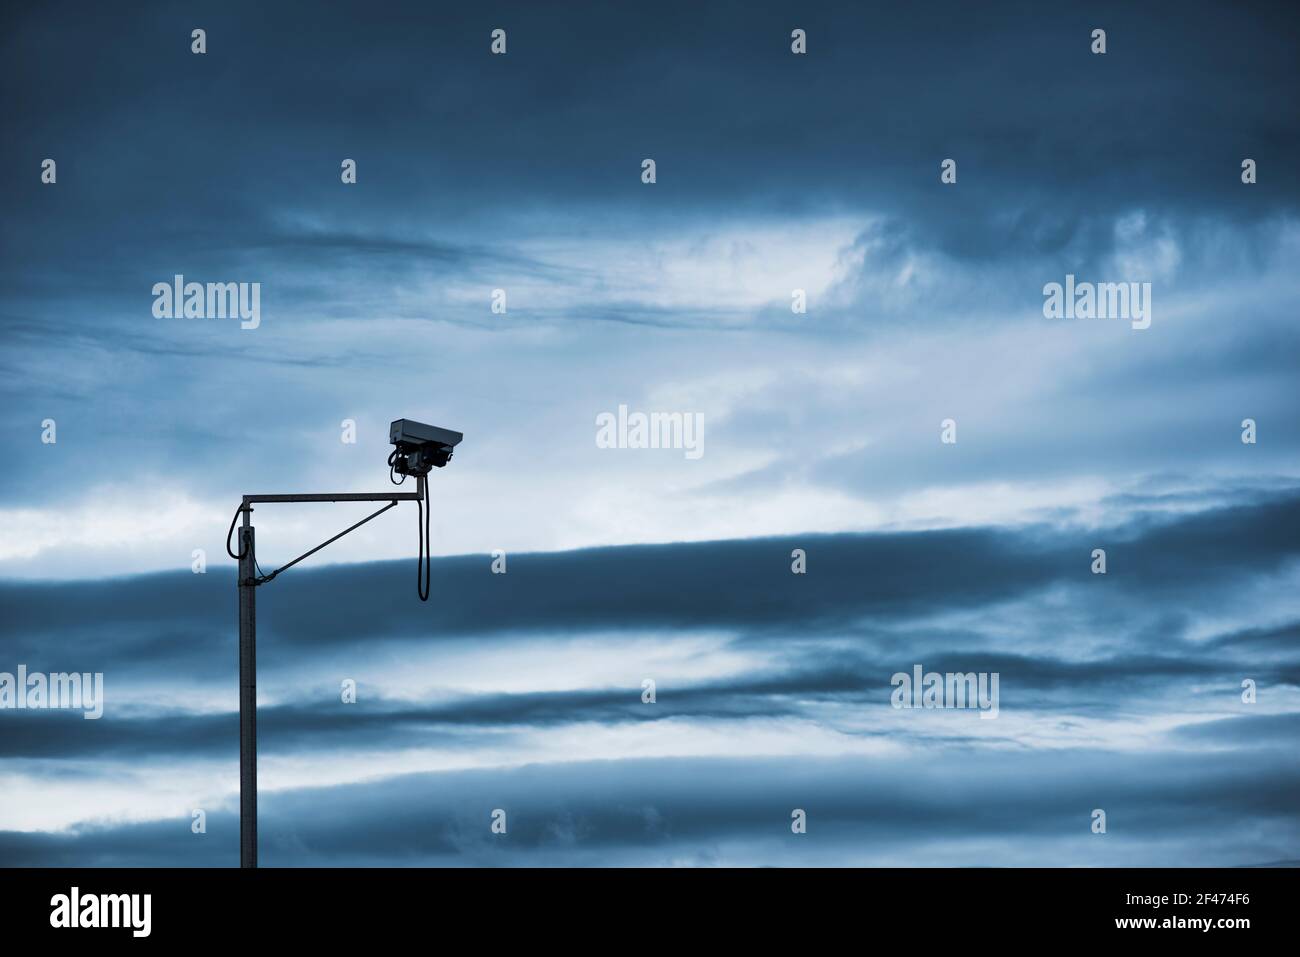 Security camera against a dark, moody sky Stock Photo